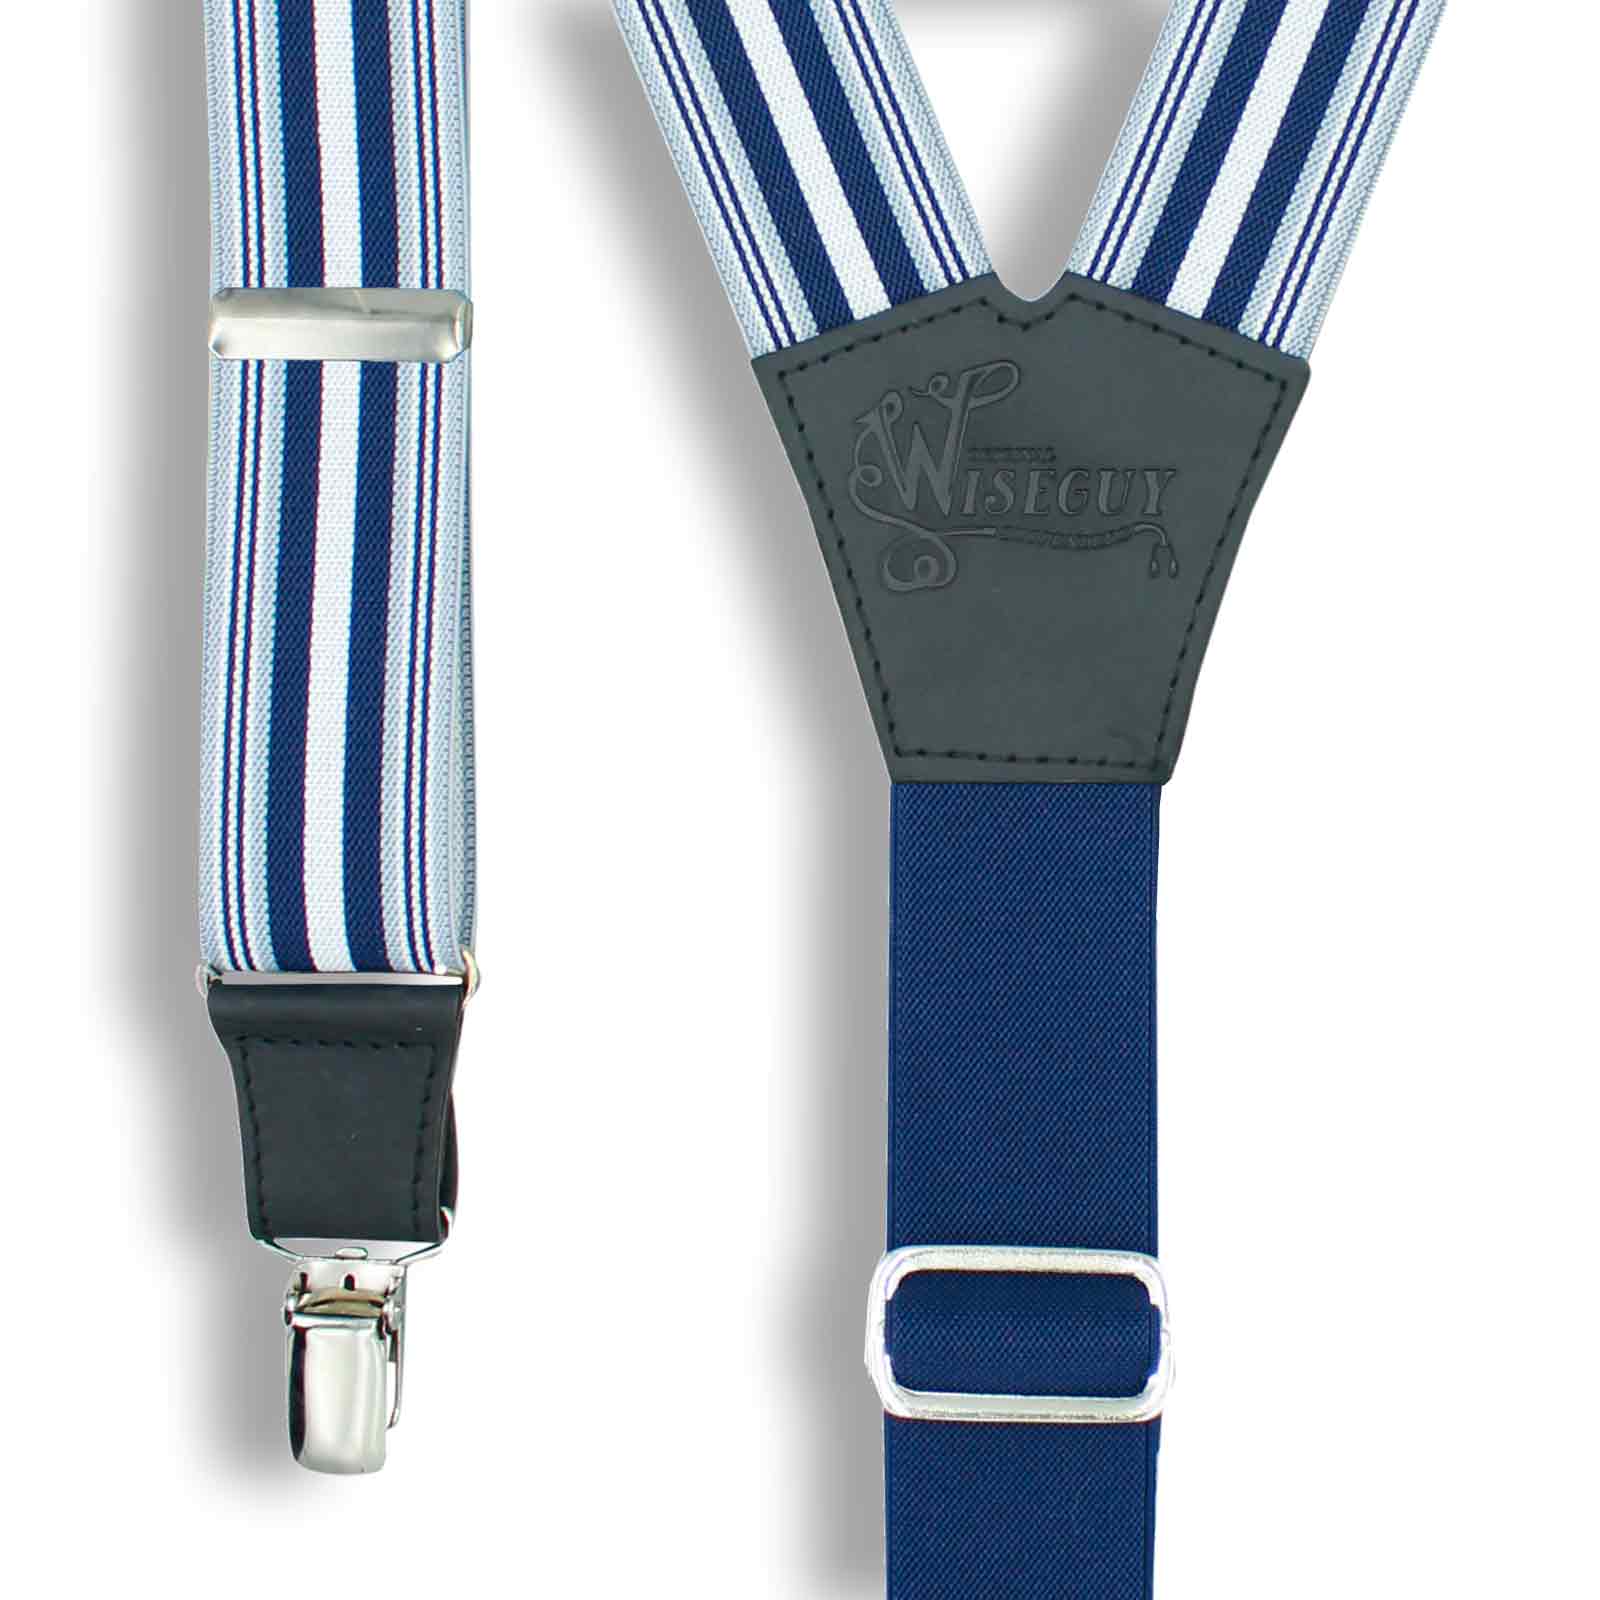 Multitrack Blues Striped Suspenders wide straps (1.36 inch/3.5 cm) - Wiseguy Suspenders